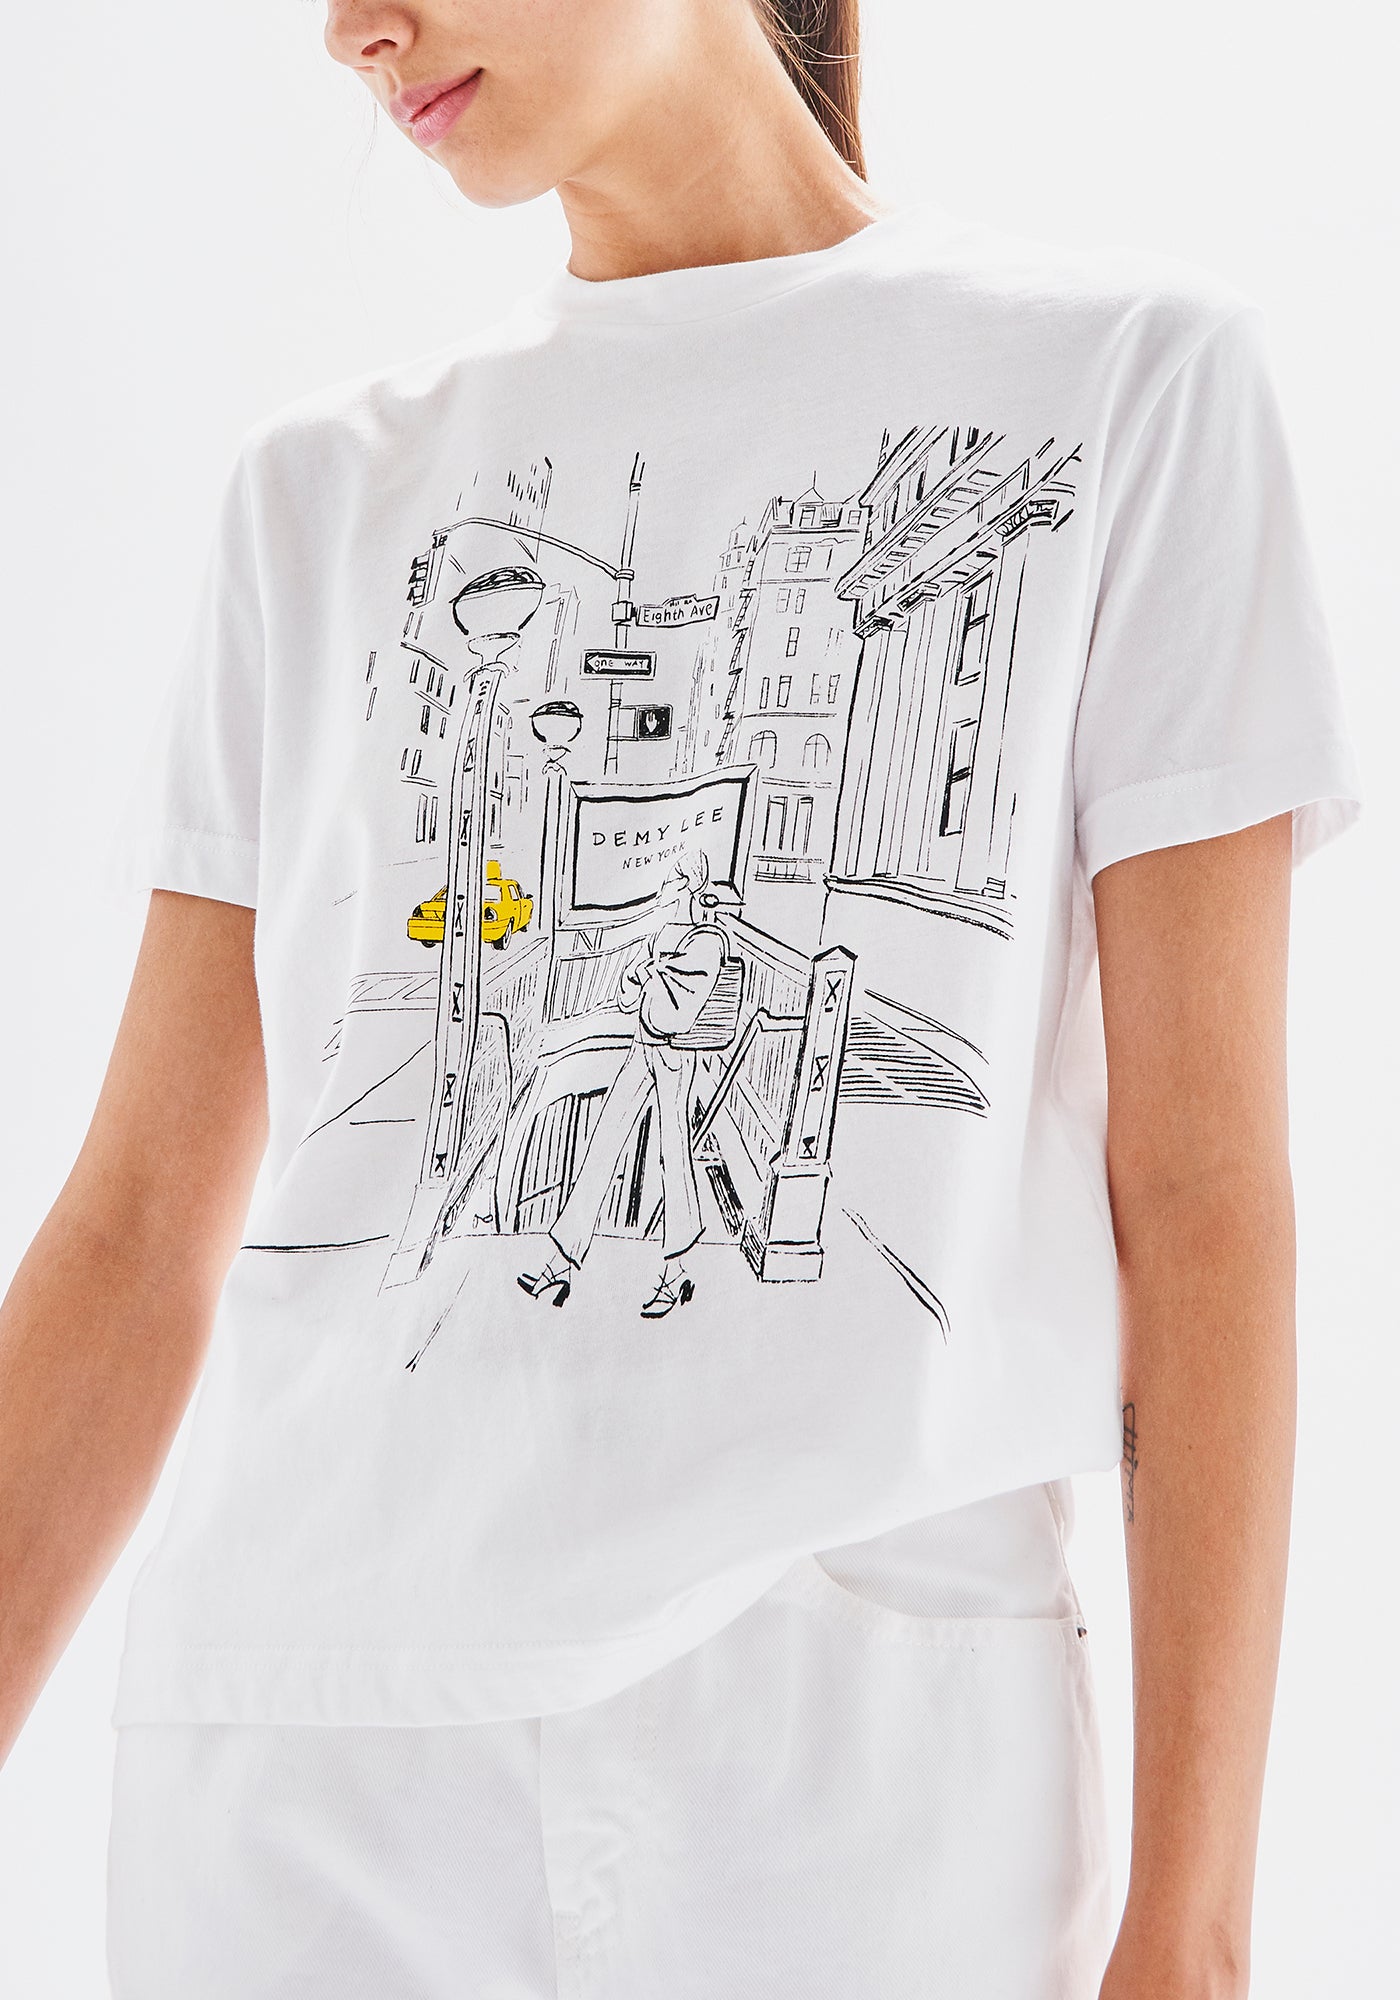 DLNY Graphic T-Shirt